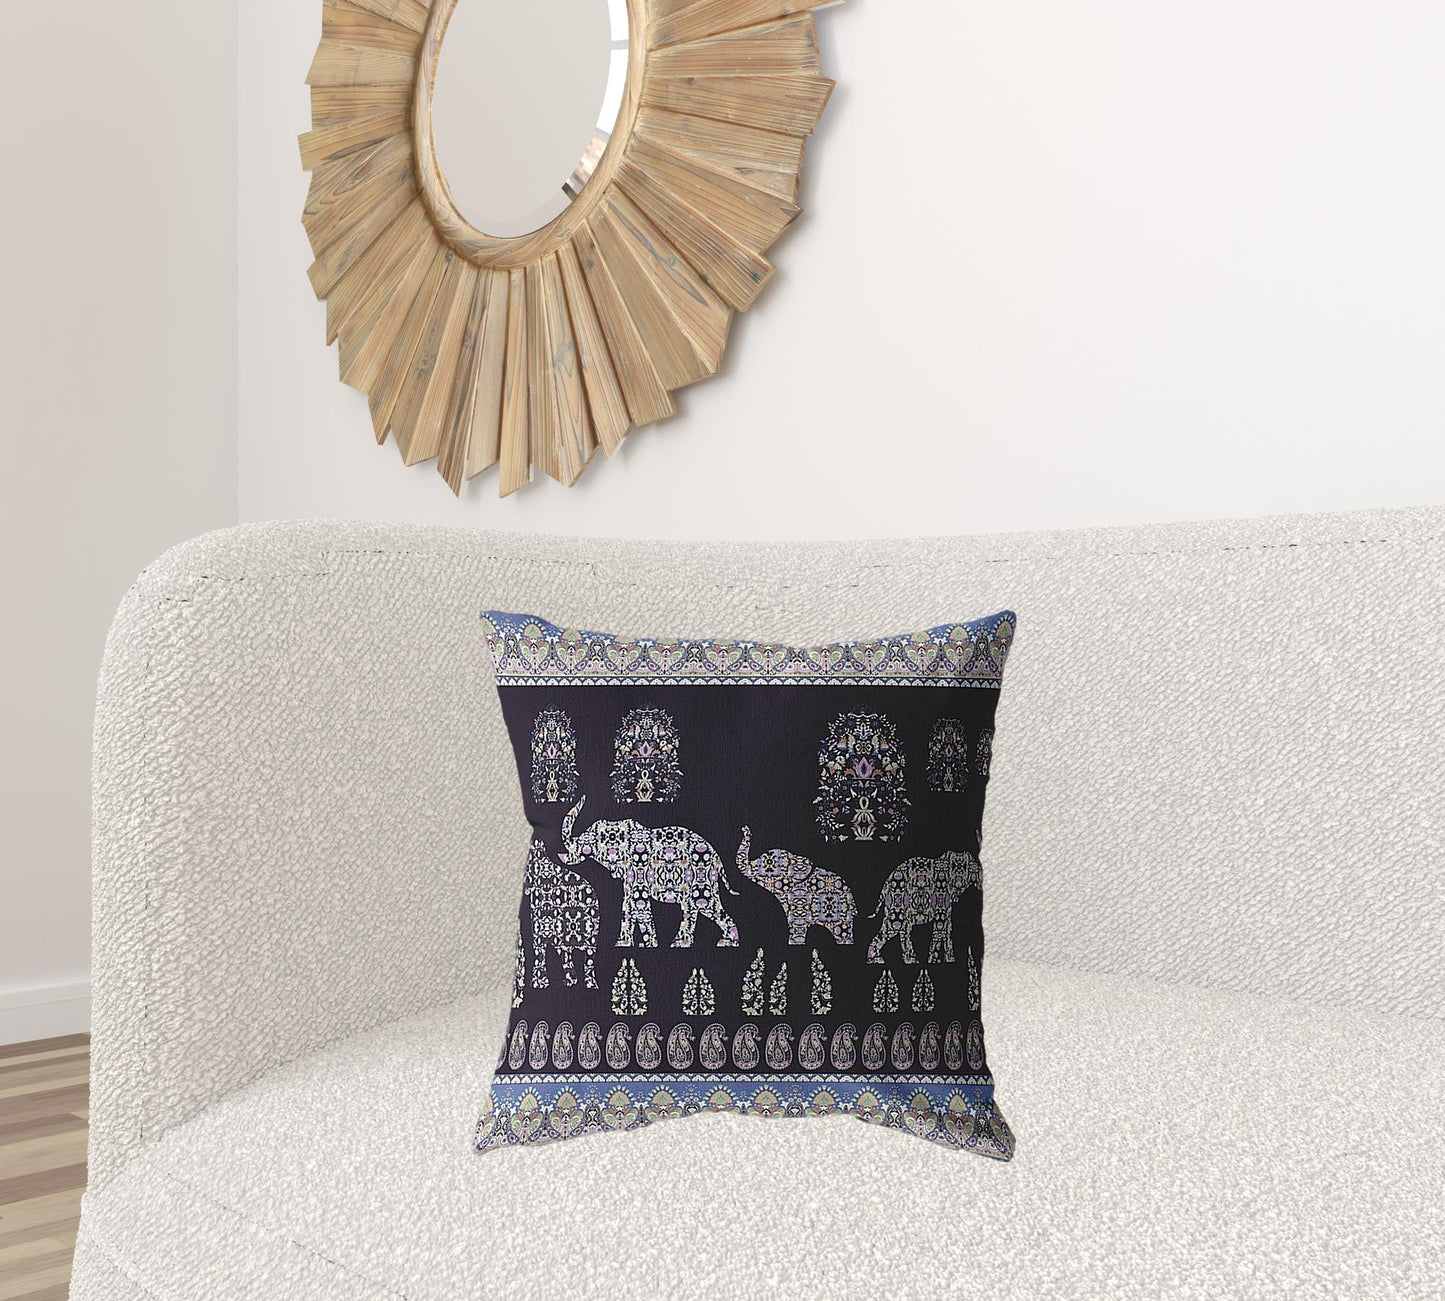 18” Purple Ornate Elephant Suede Throw Pillow